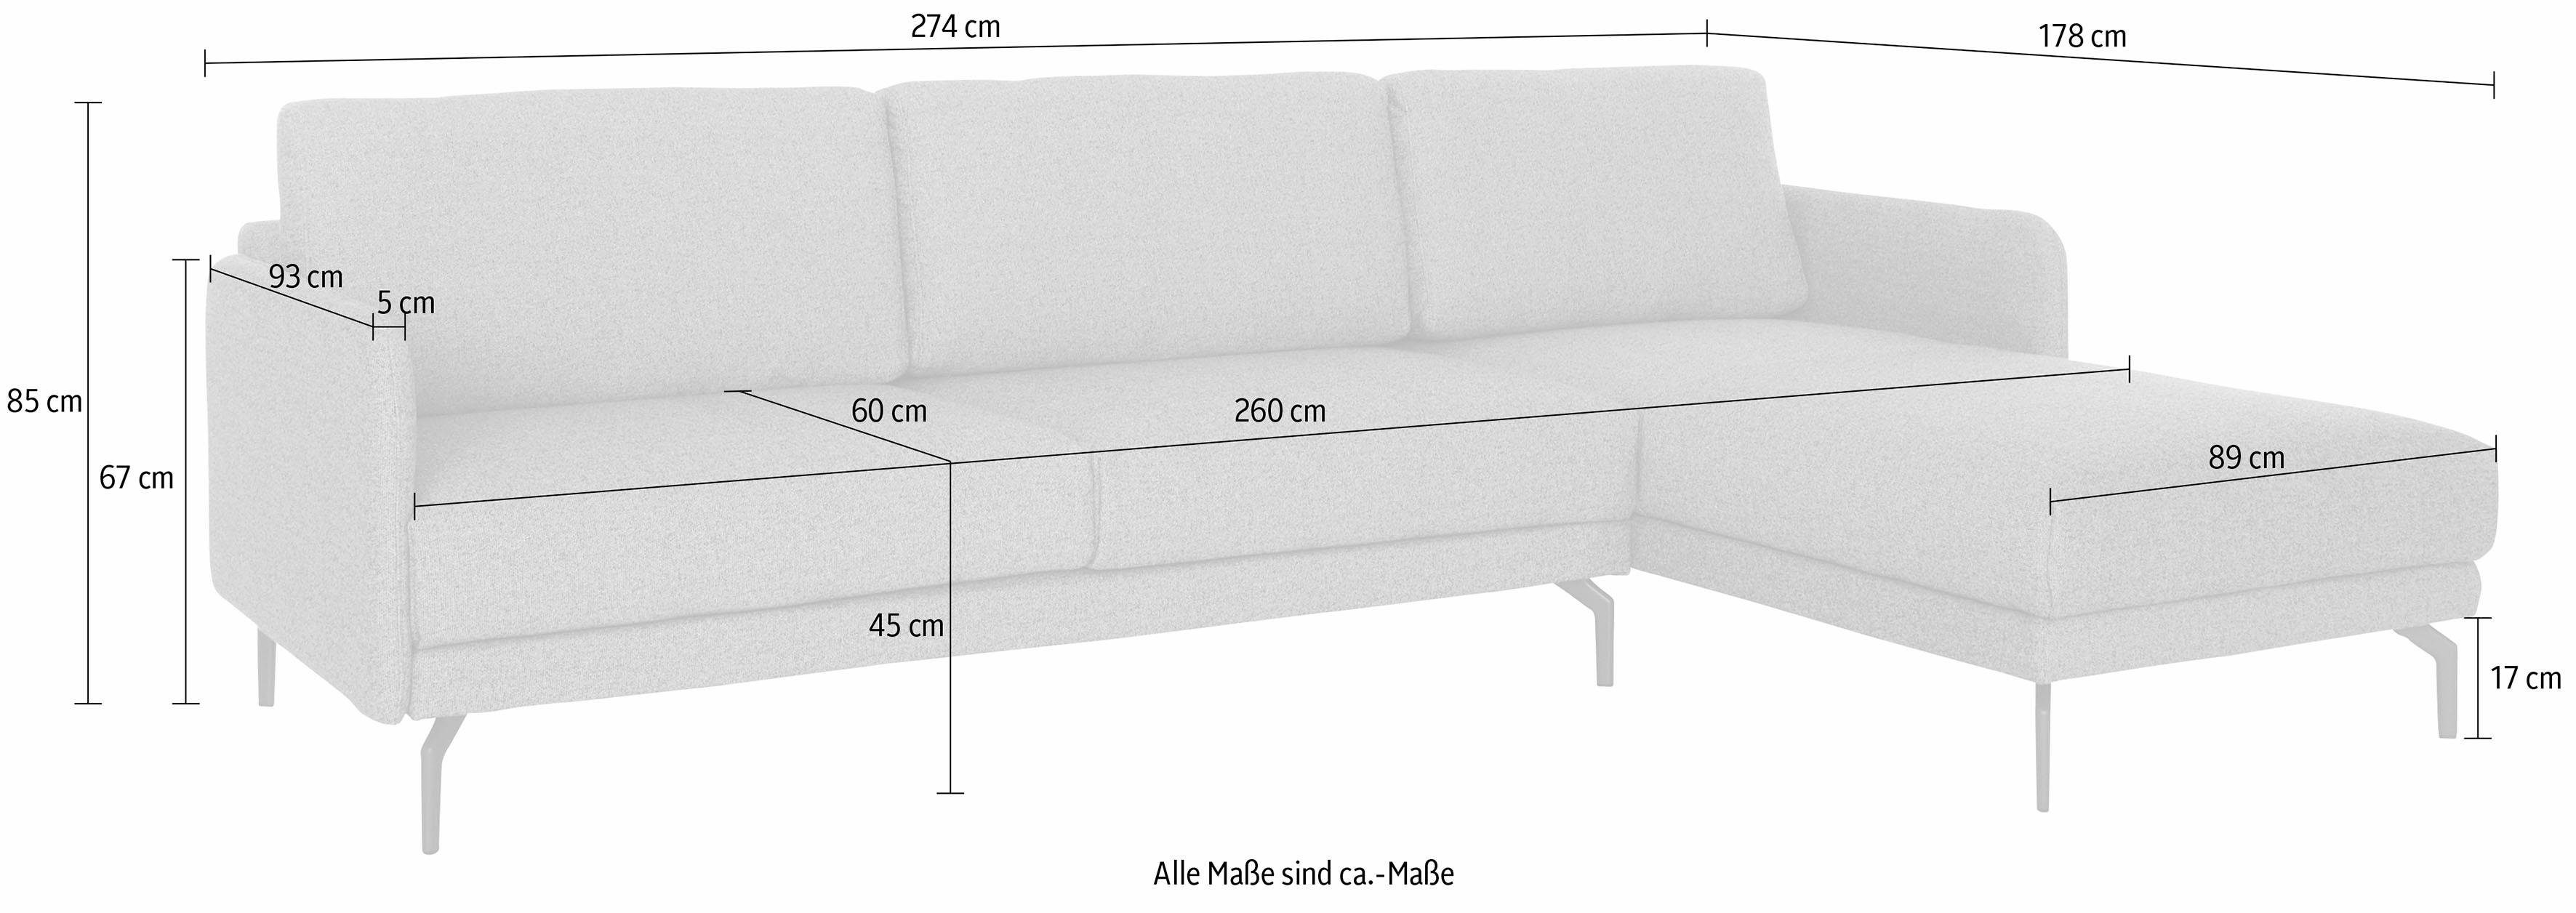 sofa Armlehne cm, Alugussfuß schmal, Breite hülsta 274 hs.450, Ecksofa sehr Umbragrau